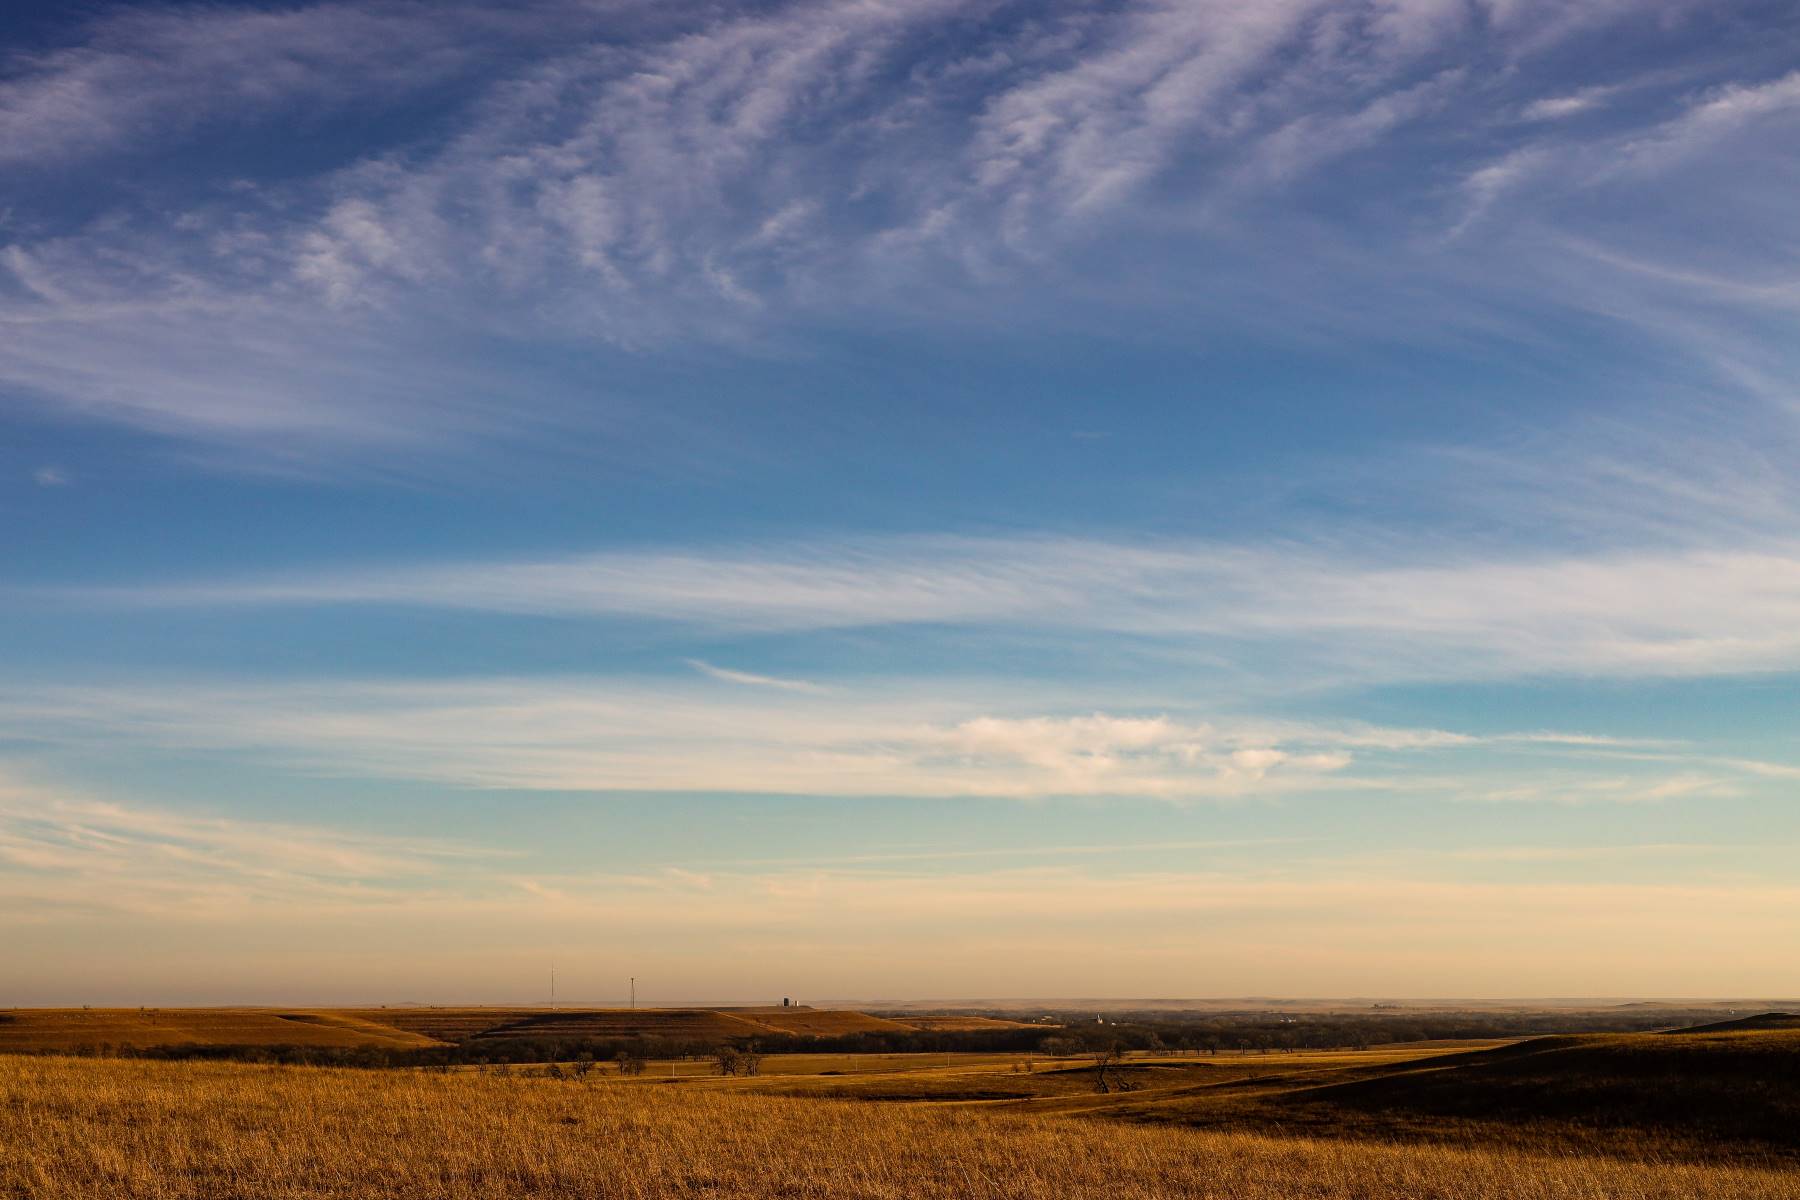 Midwest Prairie Fields spanning across Kansas